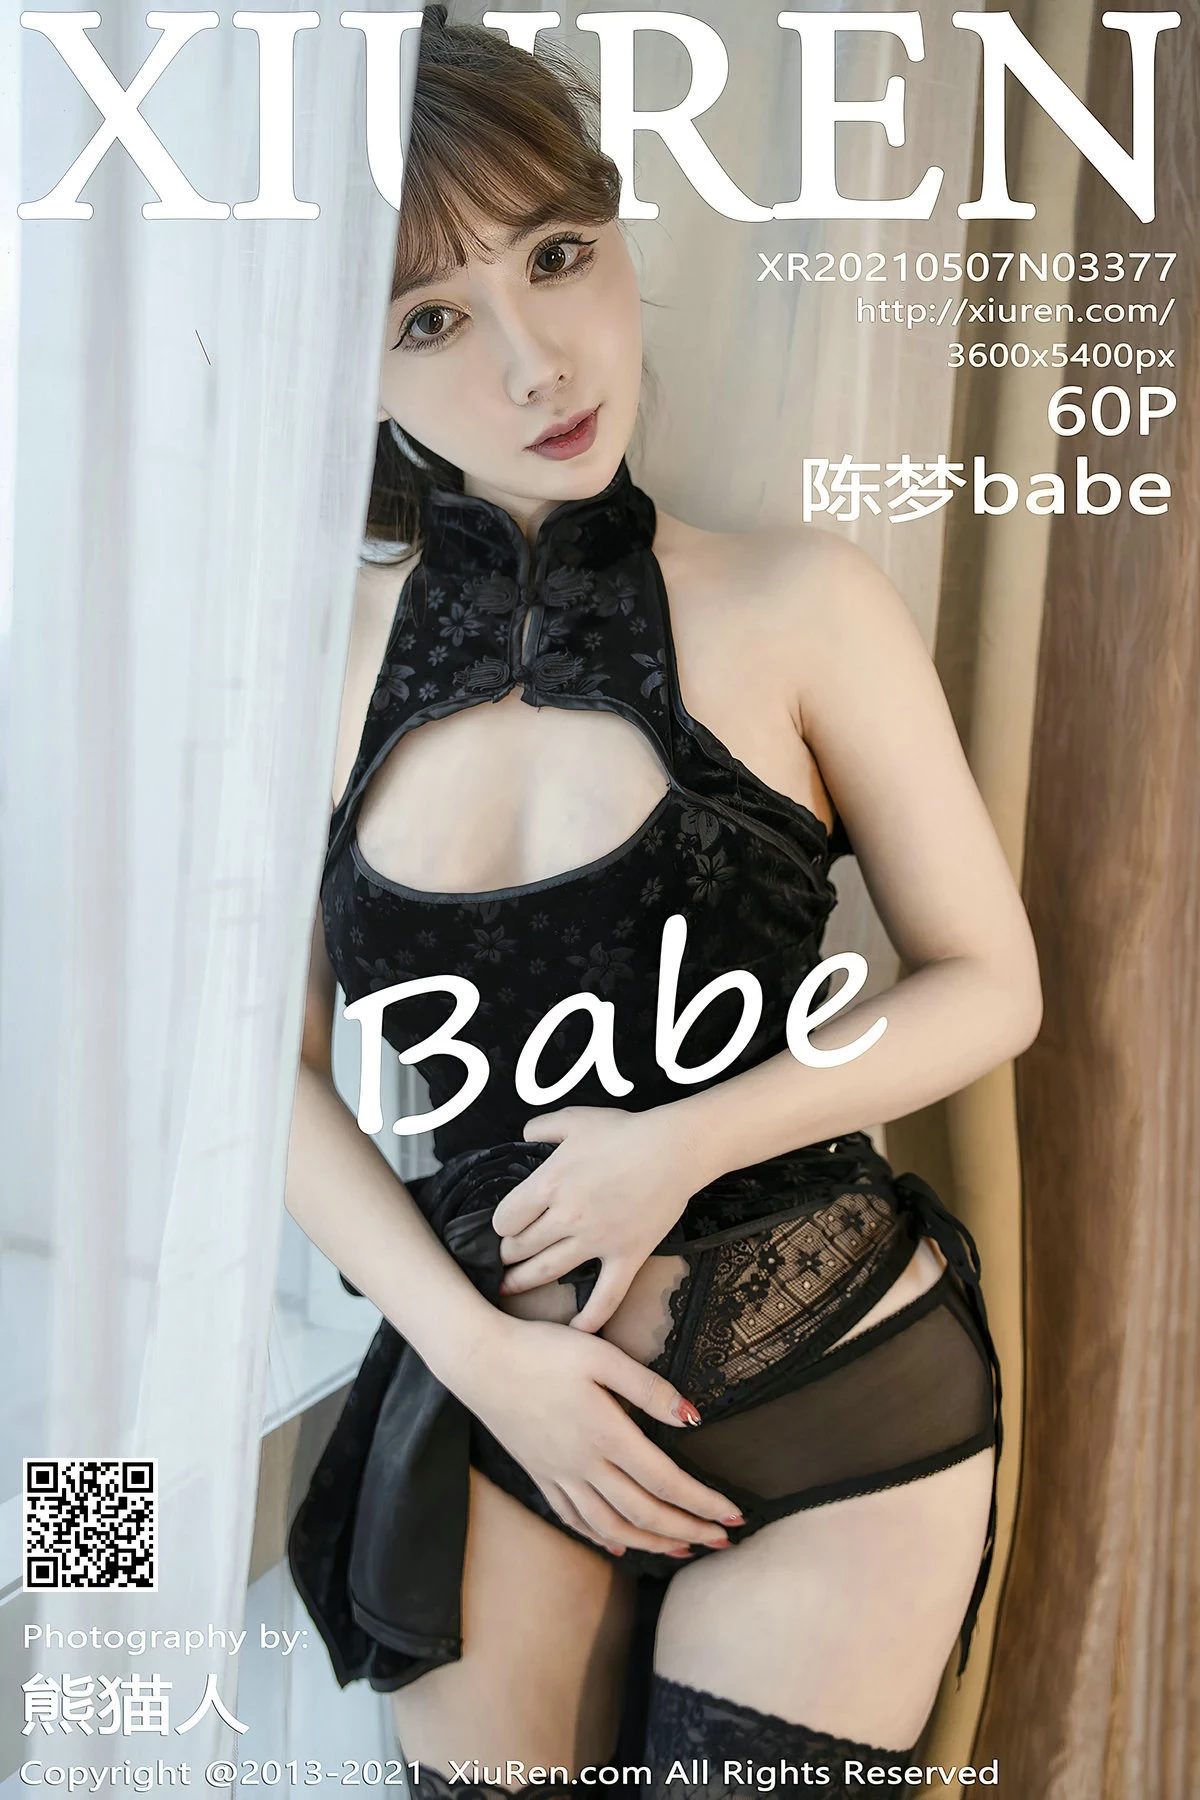 No3377 陳夢babe-1